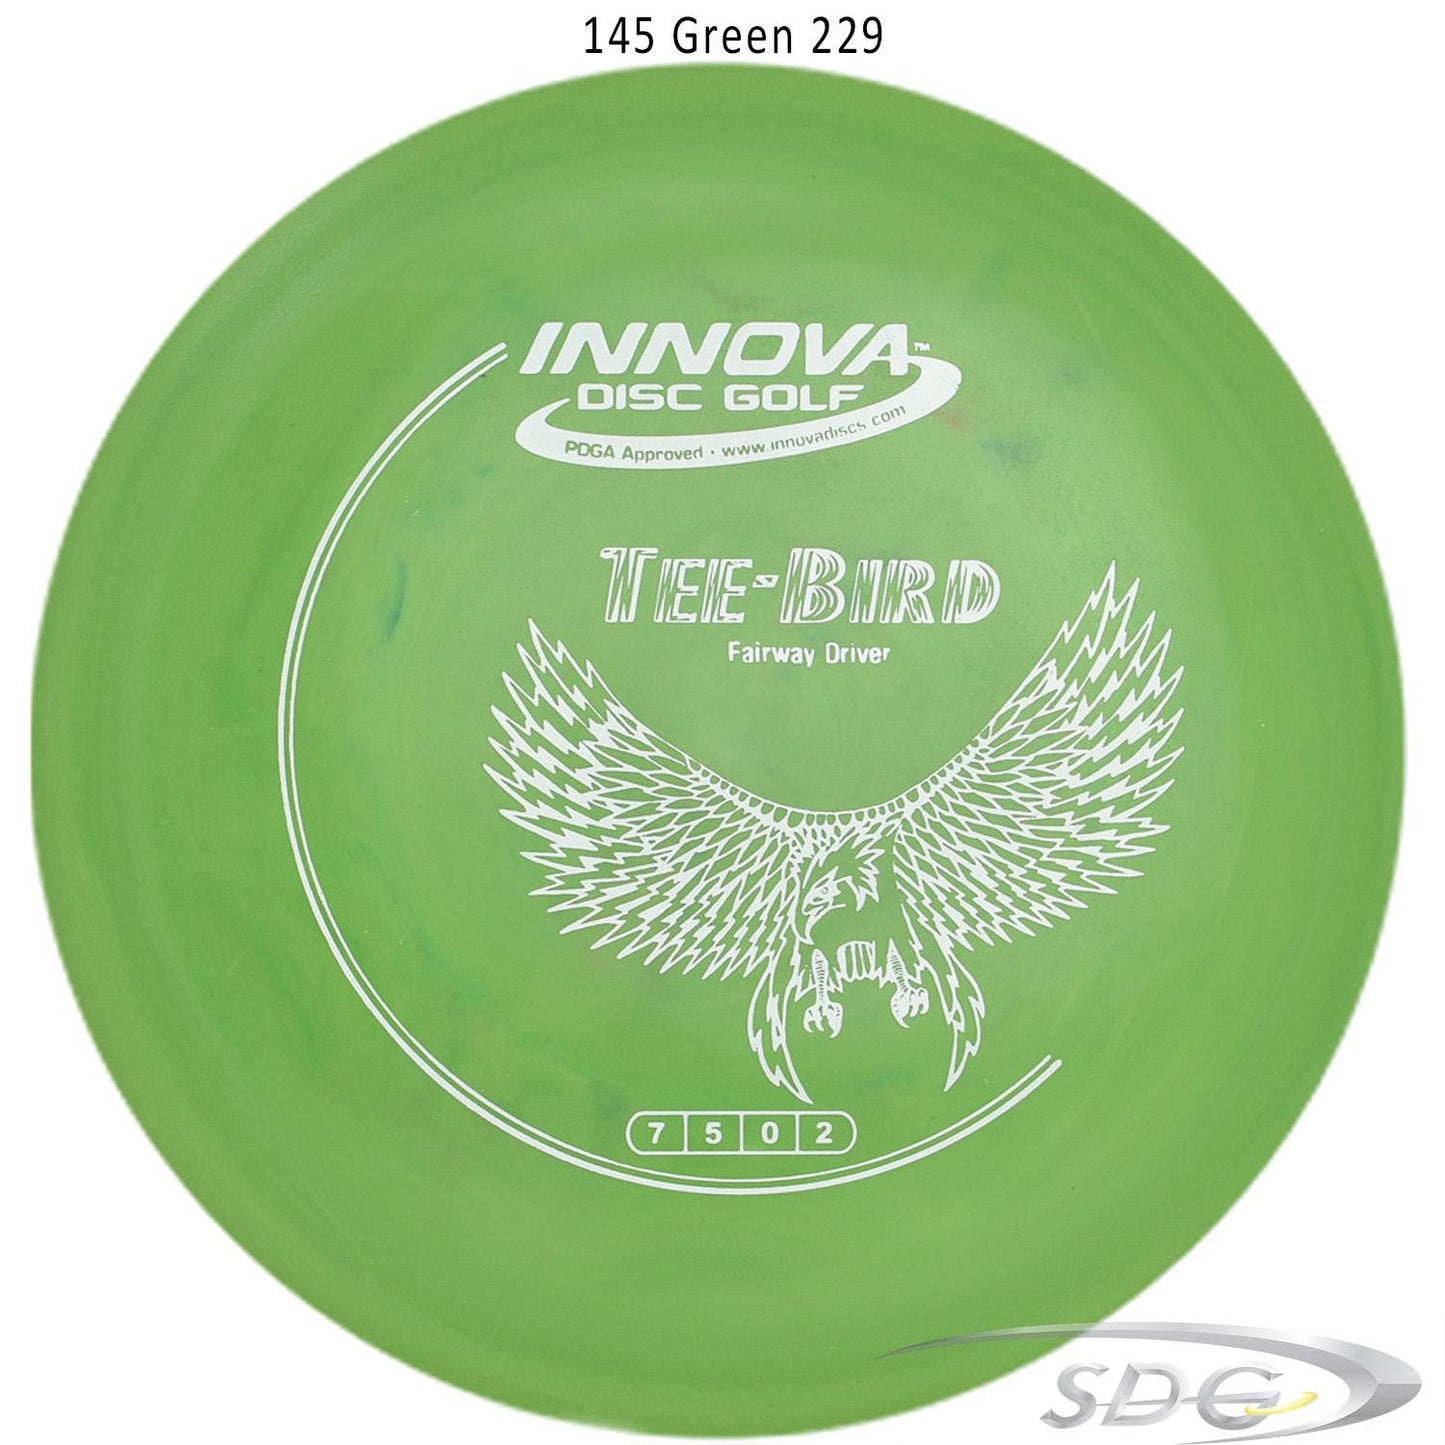 innova-dx-teebird-disc-golf-fairway-driver 145 Green 229 